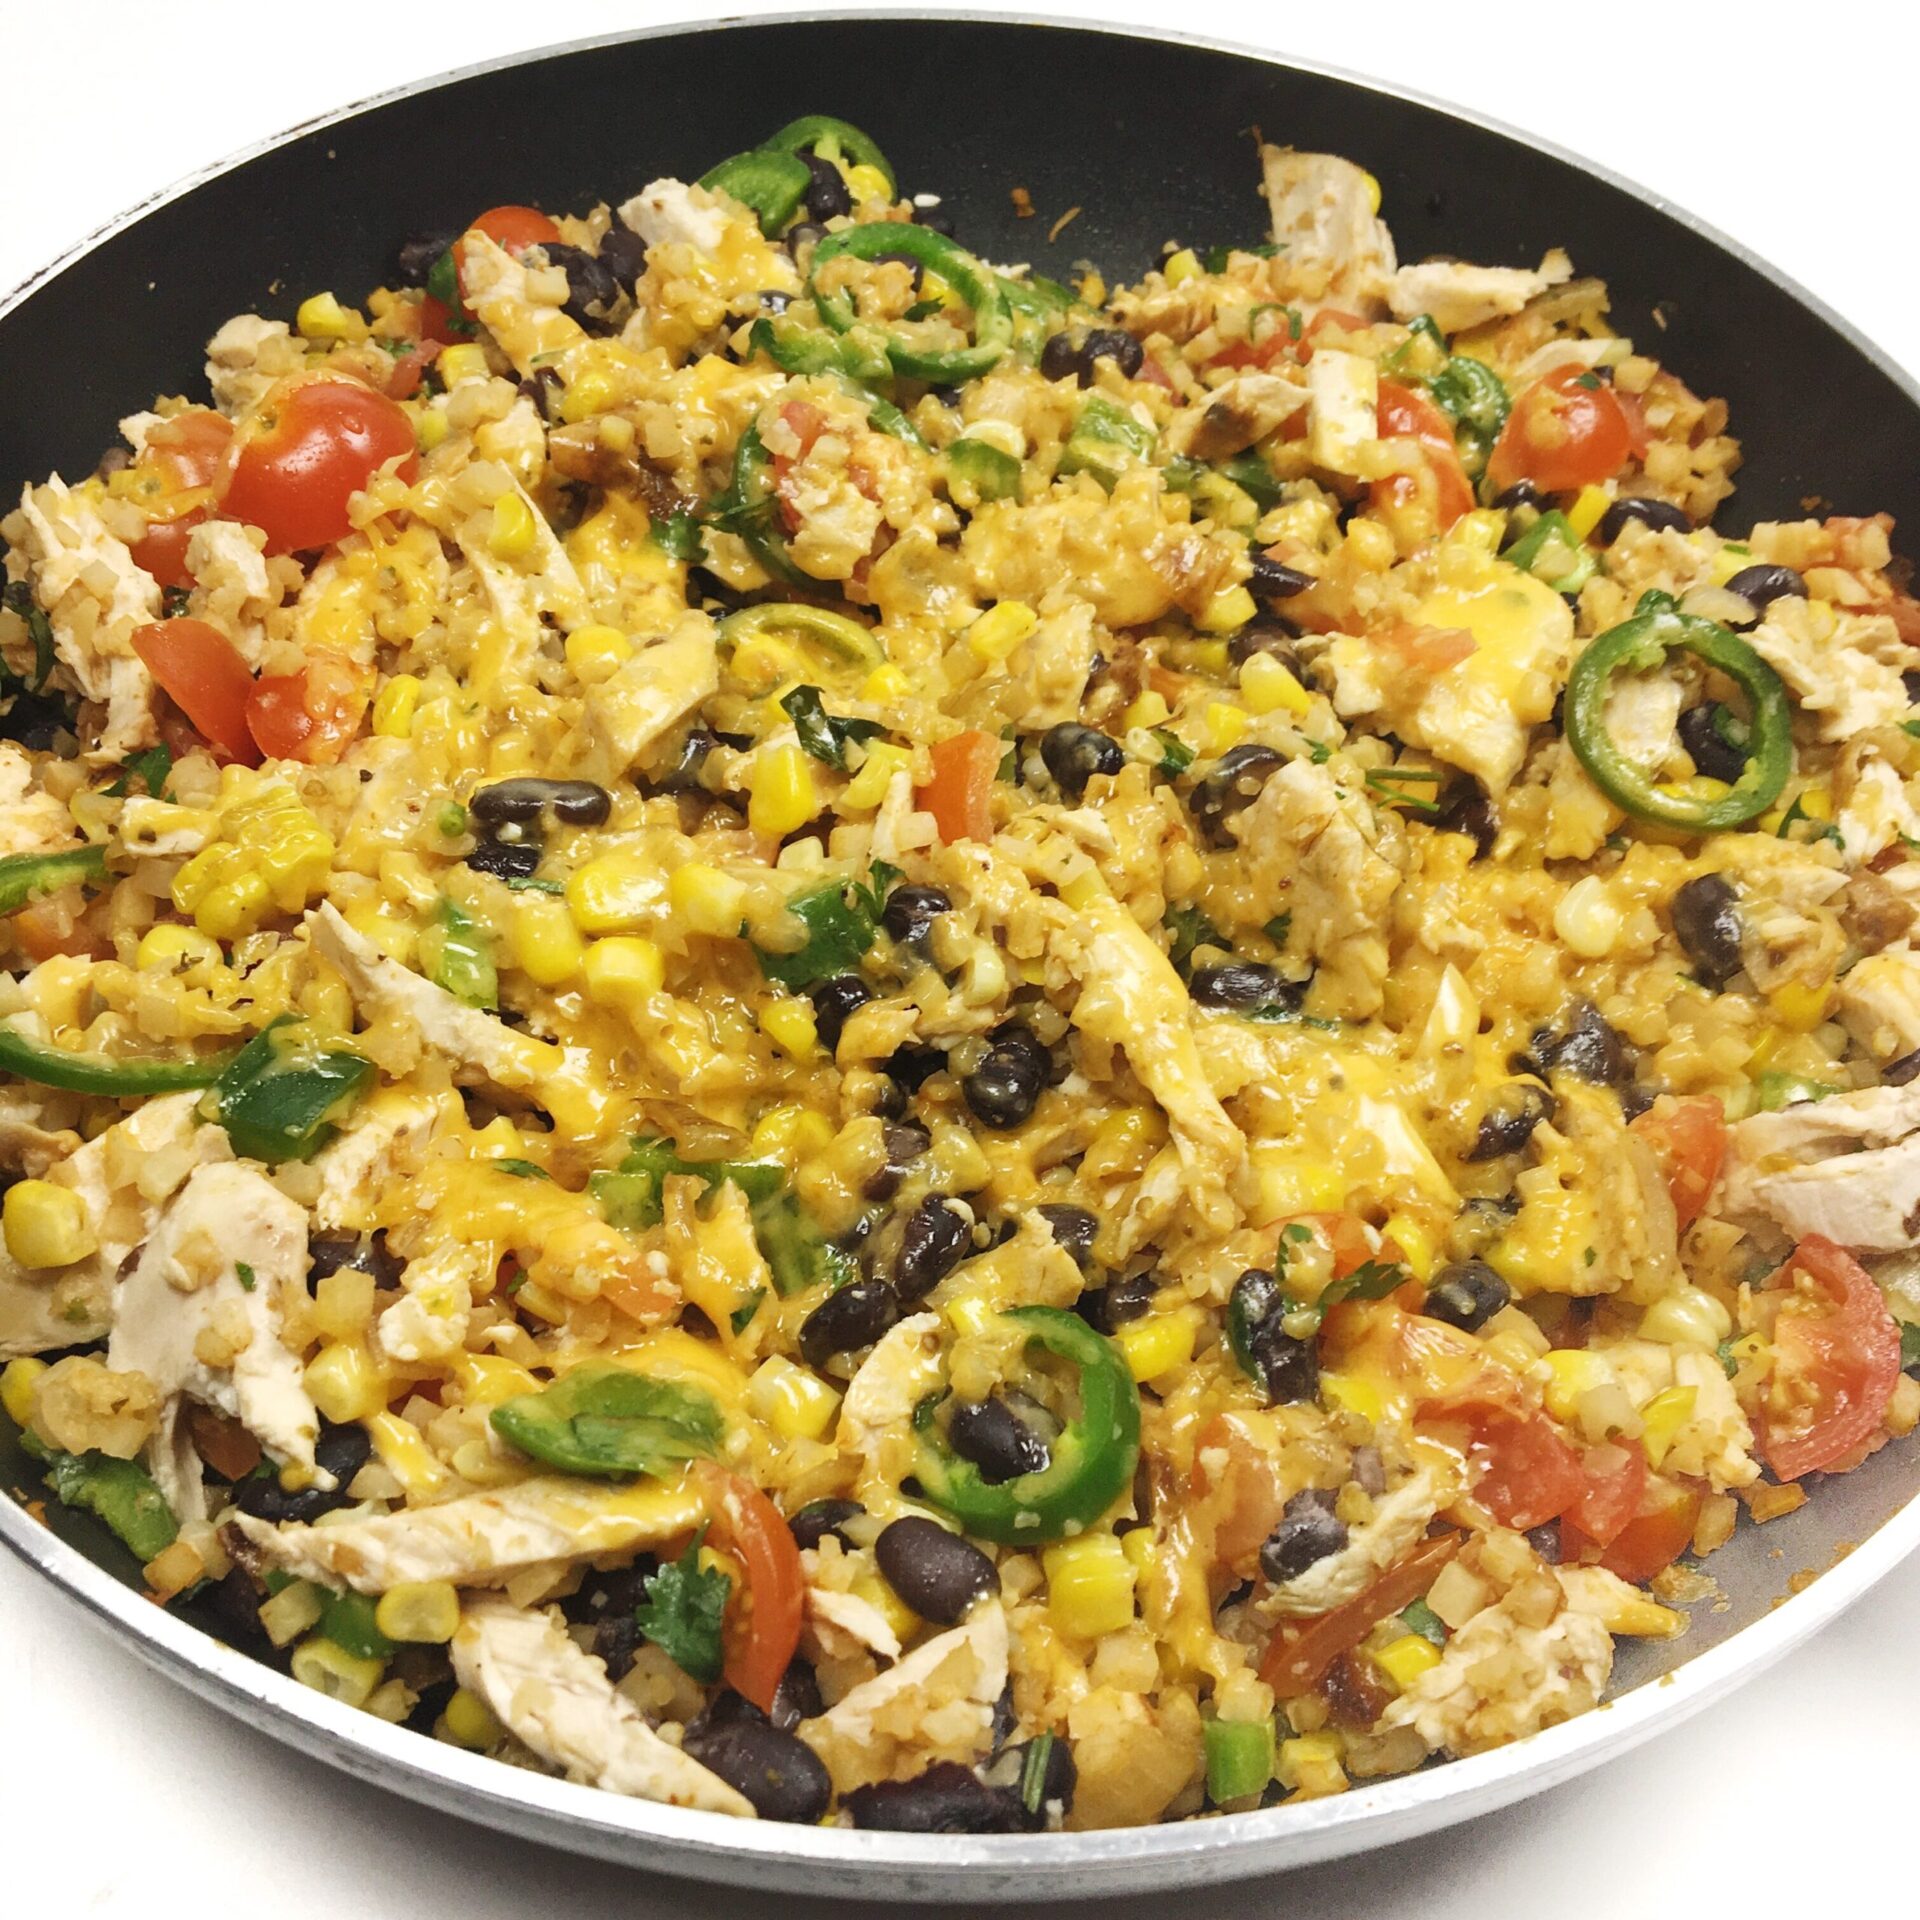 healthy weeknight recipes using cauliflower - - Cheesy Tex-Mex Cauli Rice